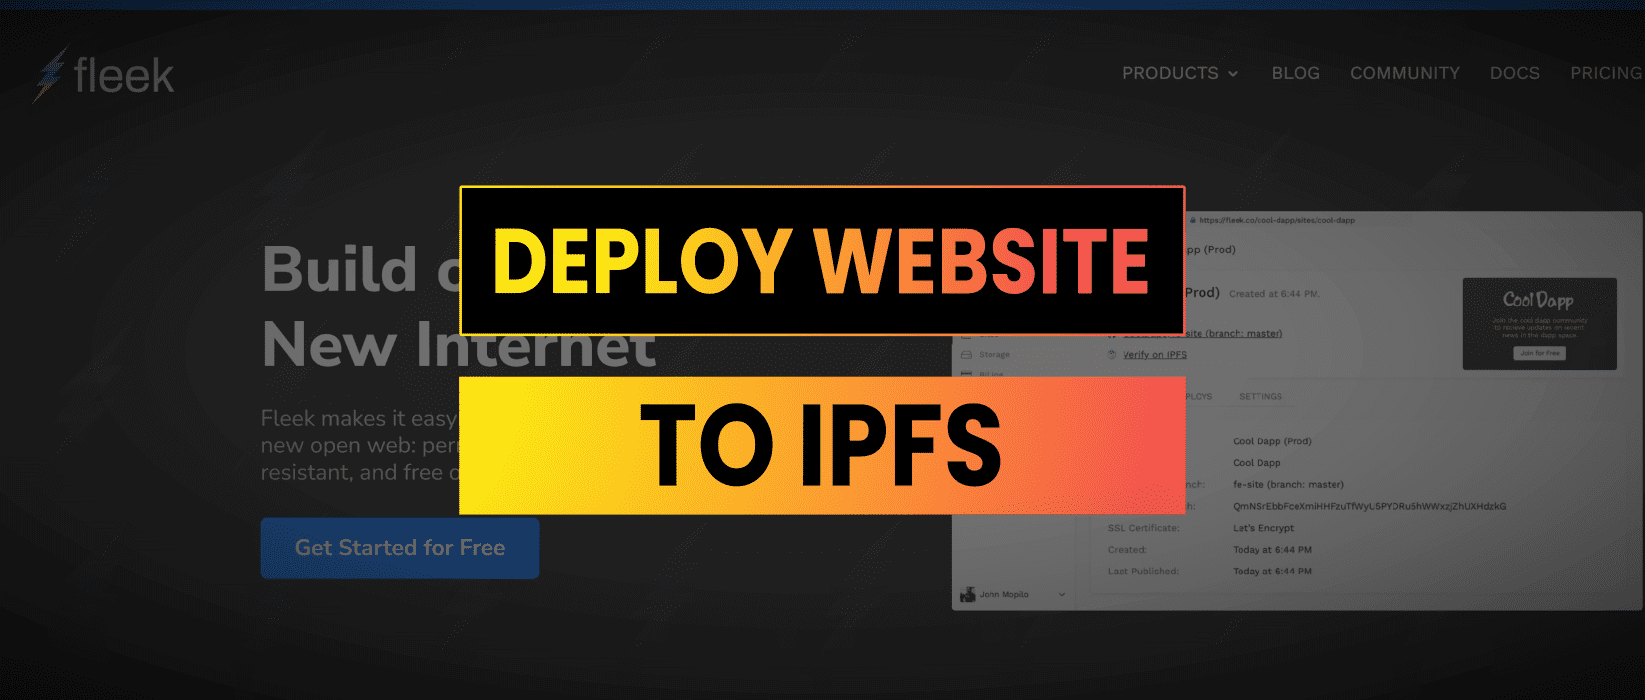 How To Deploy A Website Or dApp To IPFS | Fleek Tutorial